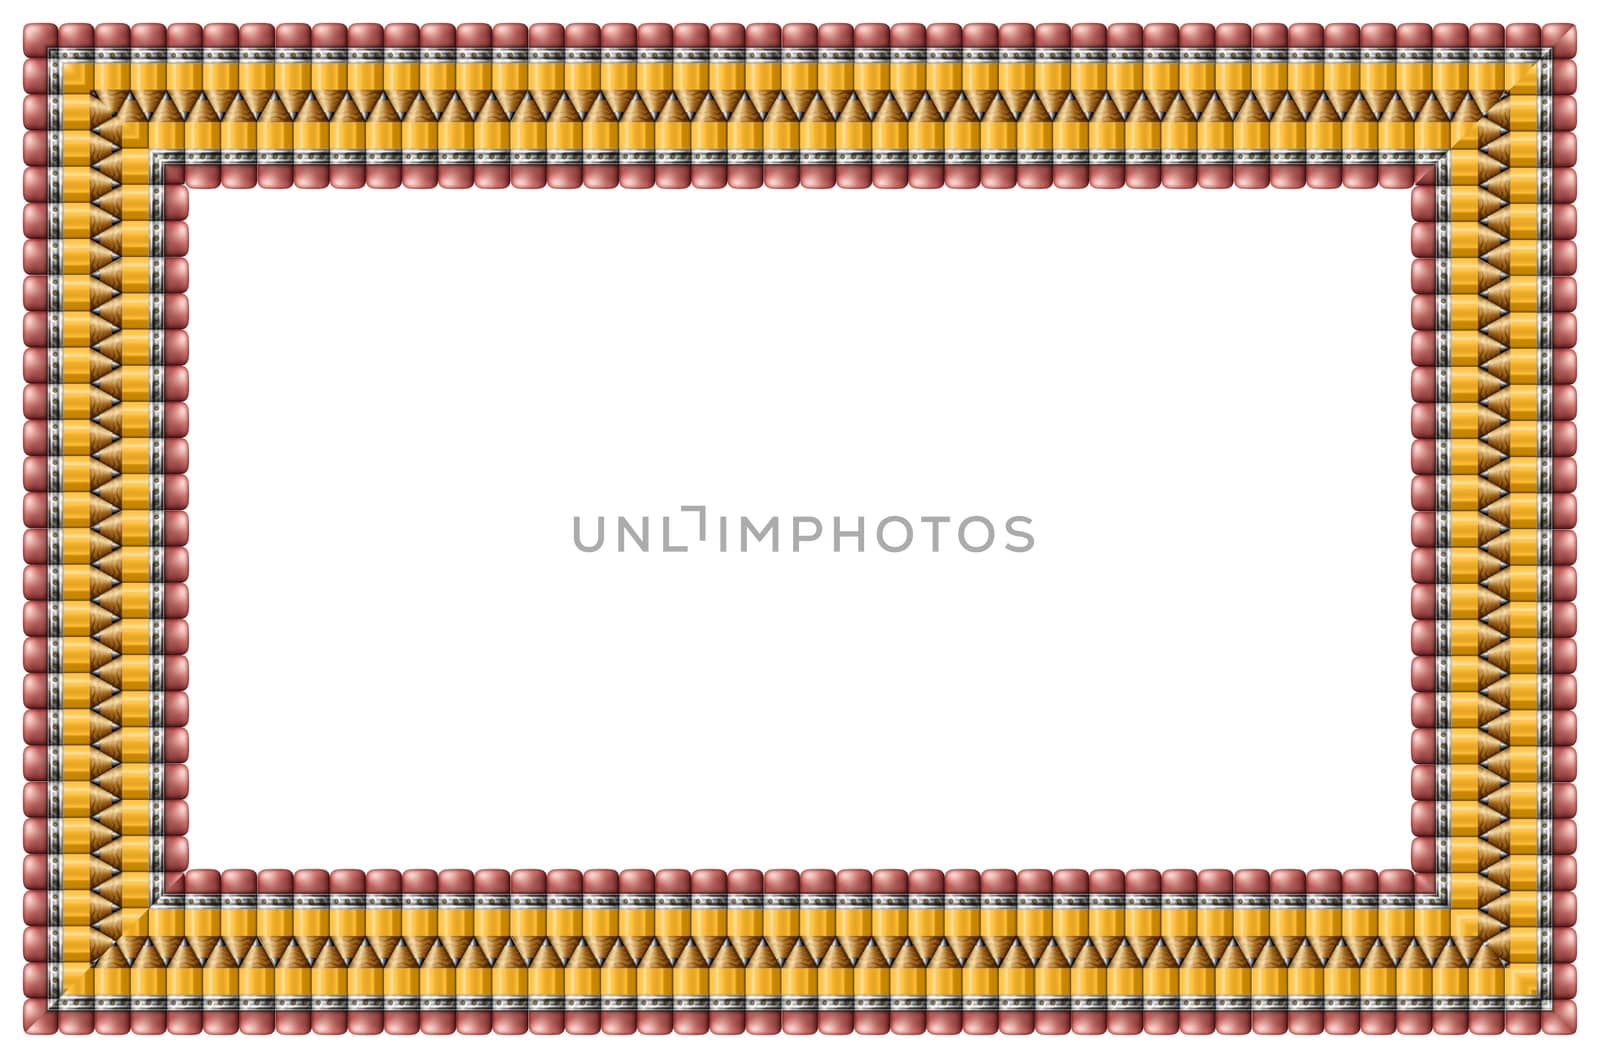 Illustration of pencils arranged in a frame.